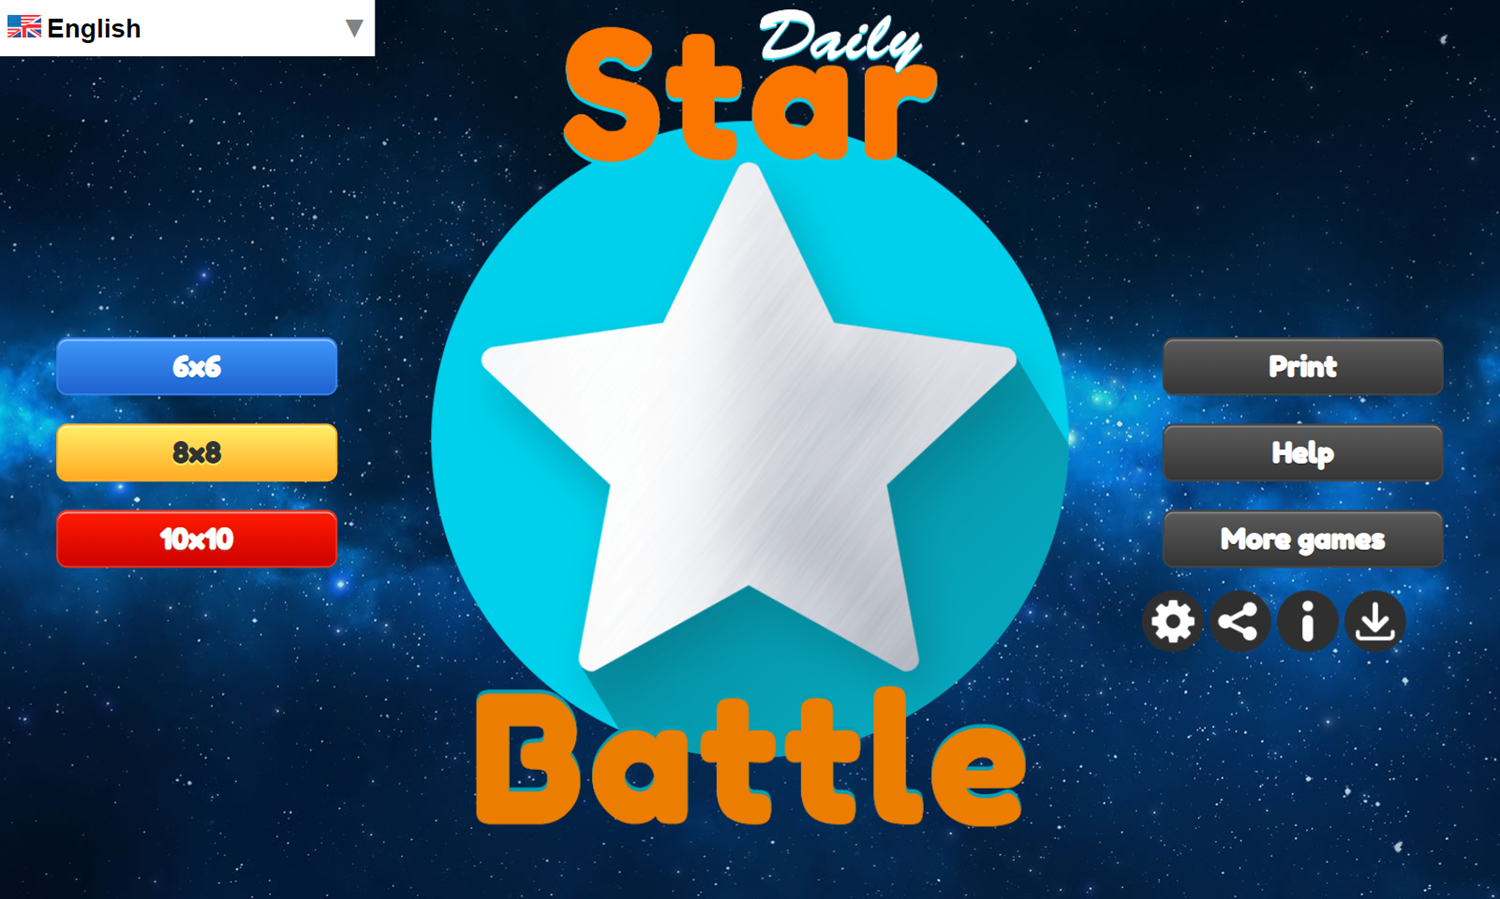 Daily Star Battle Game Welcome Screen Screenshot.